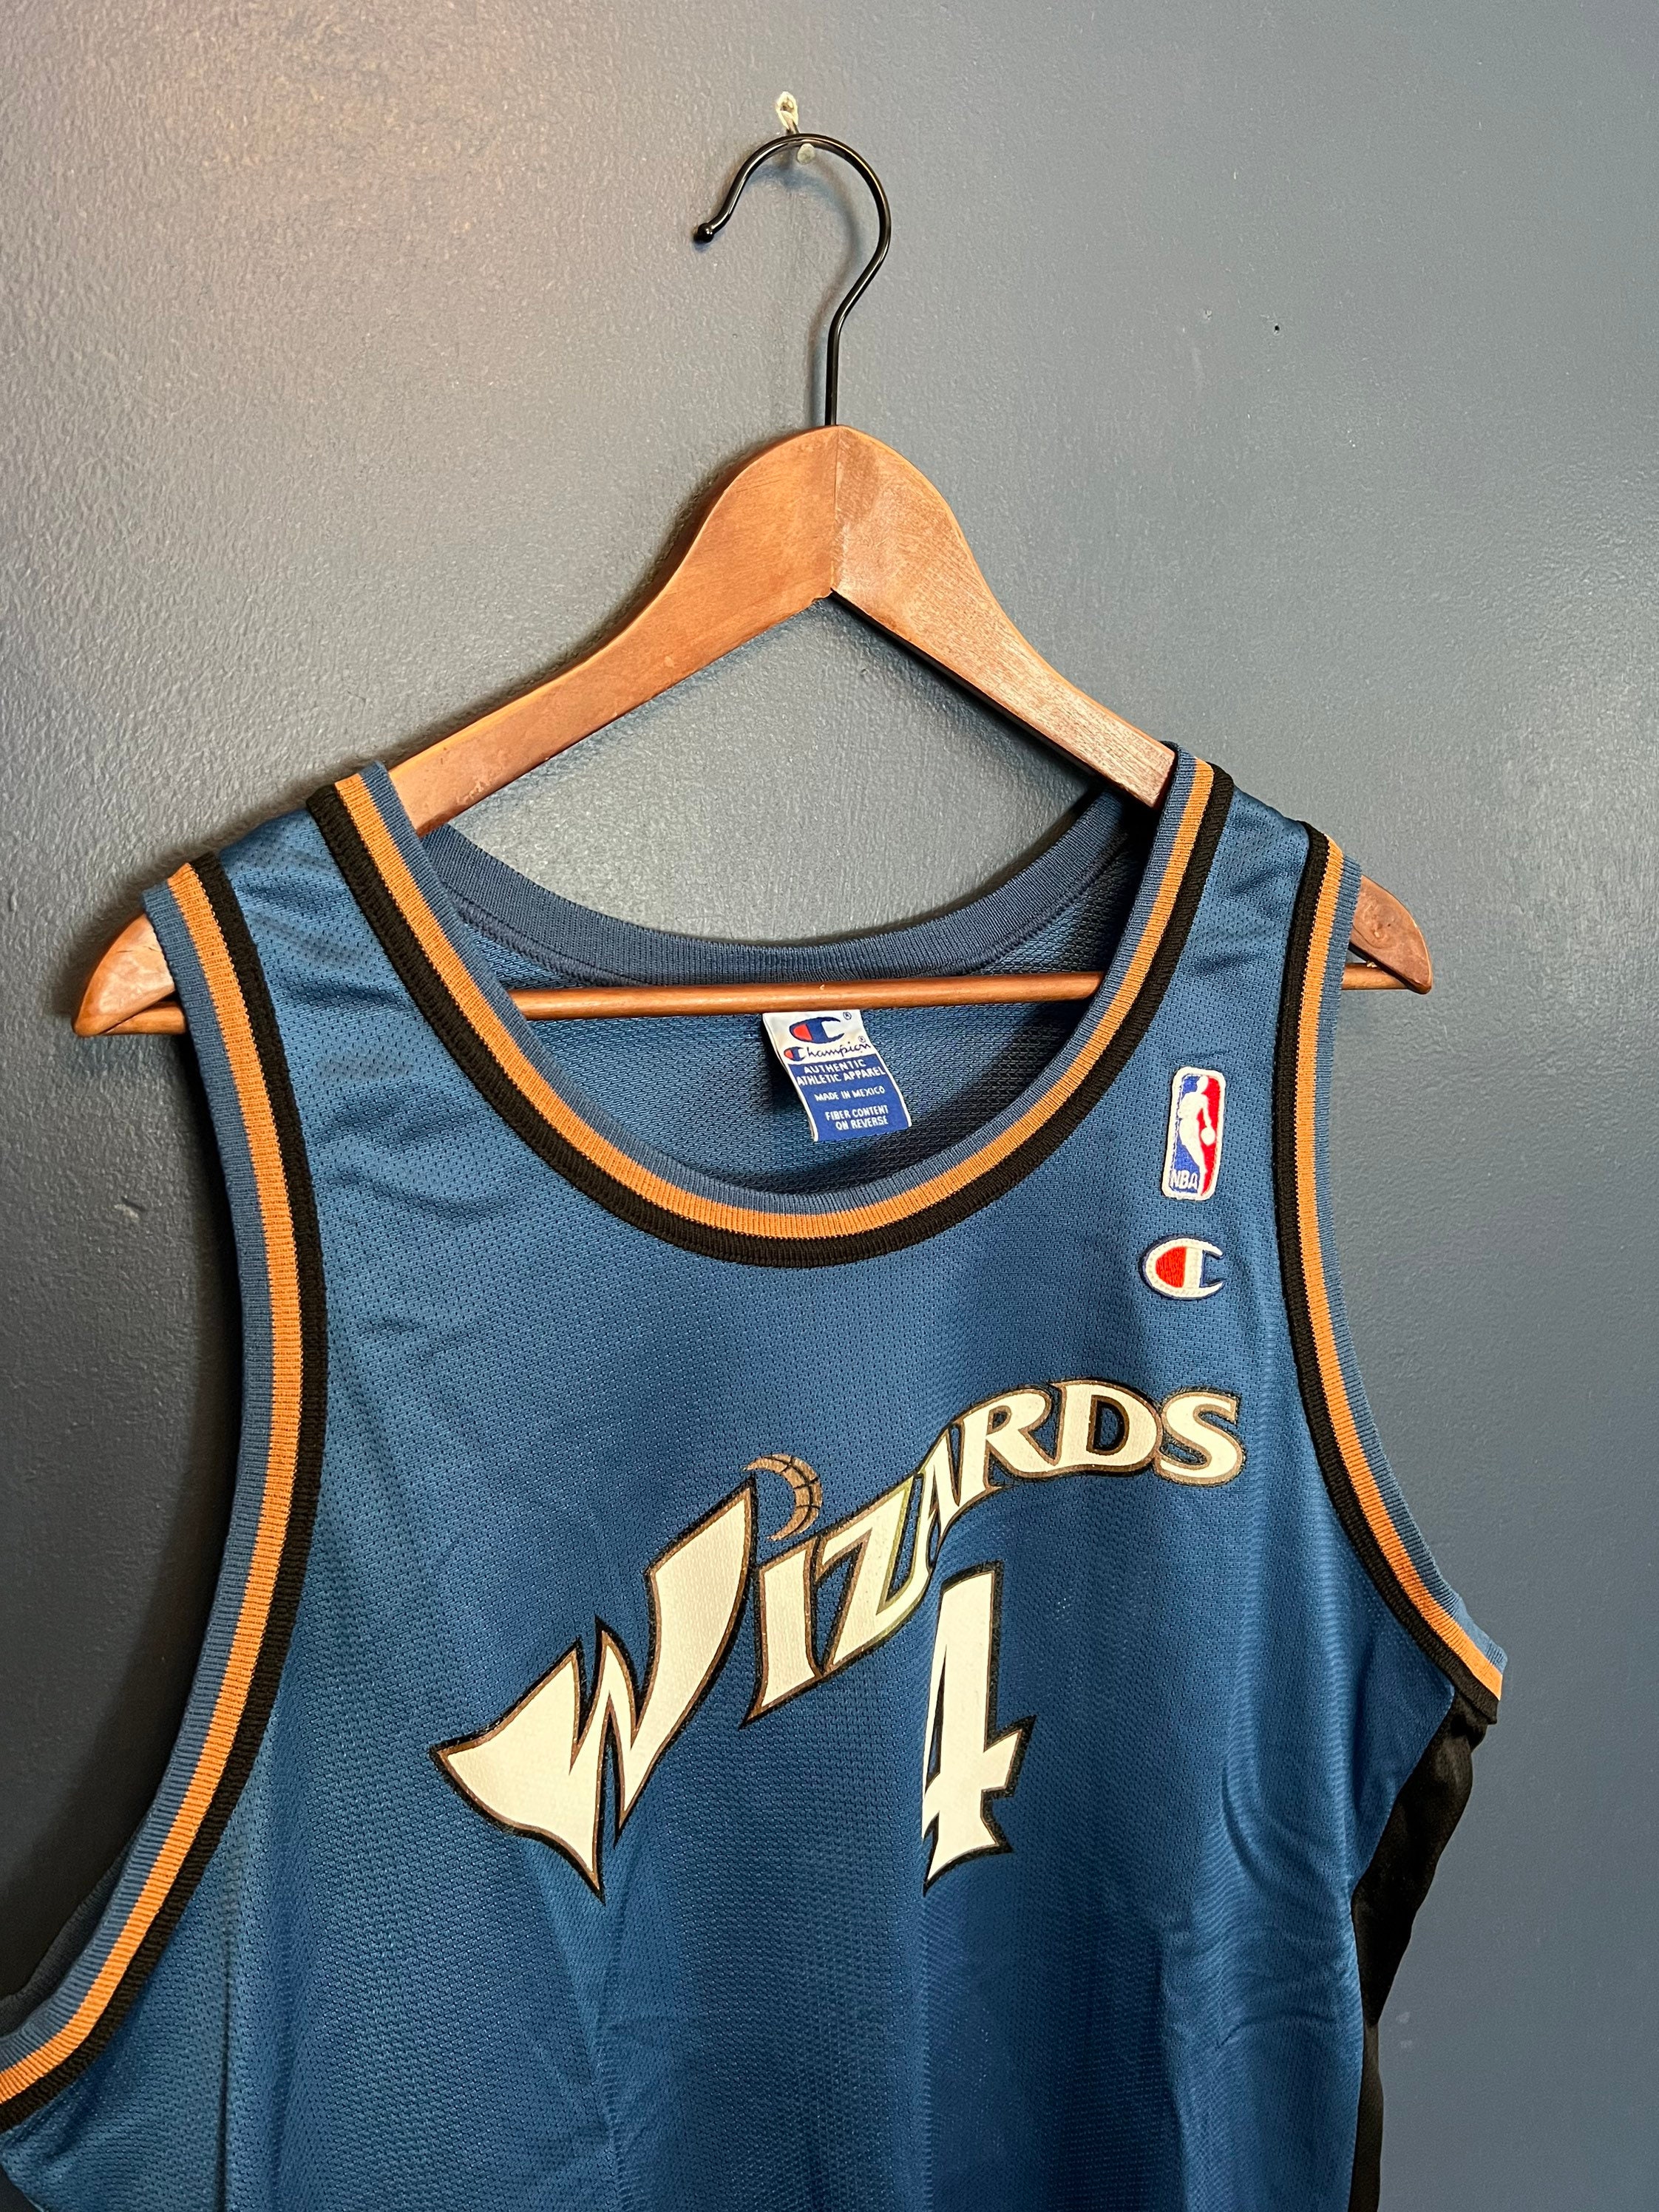 Nwt GILBERT ARENAS Washington Wizards Authentic NBA Jersey Adidas XXL Signed